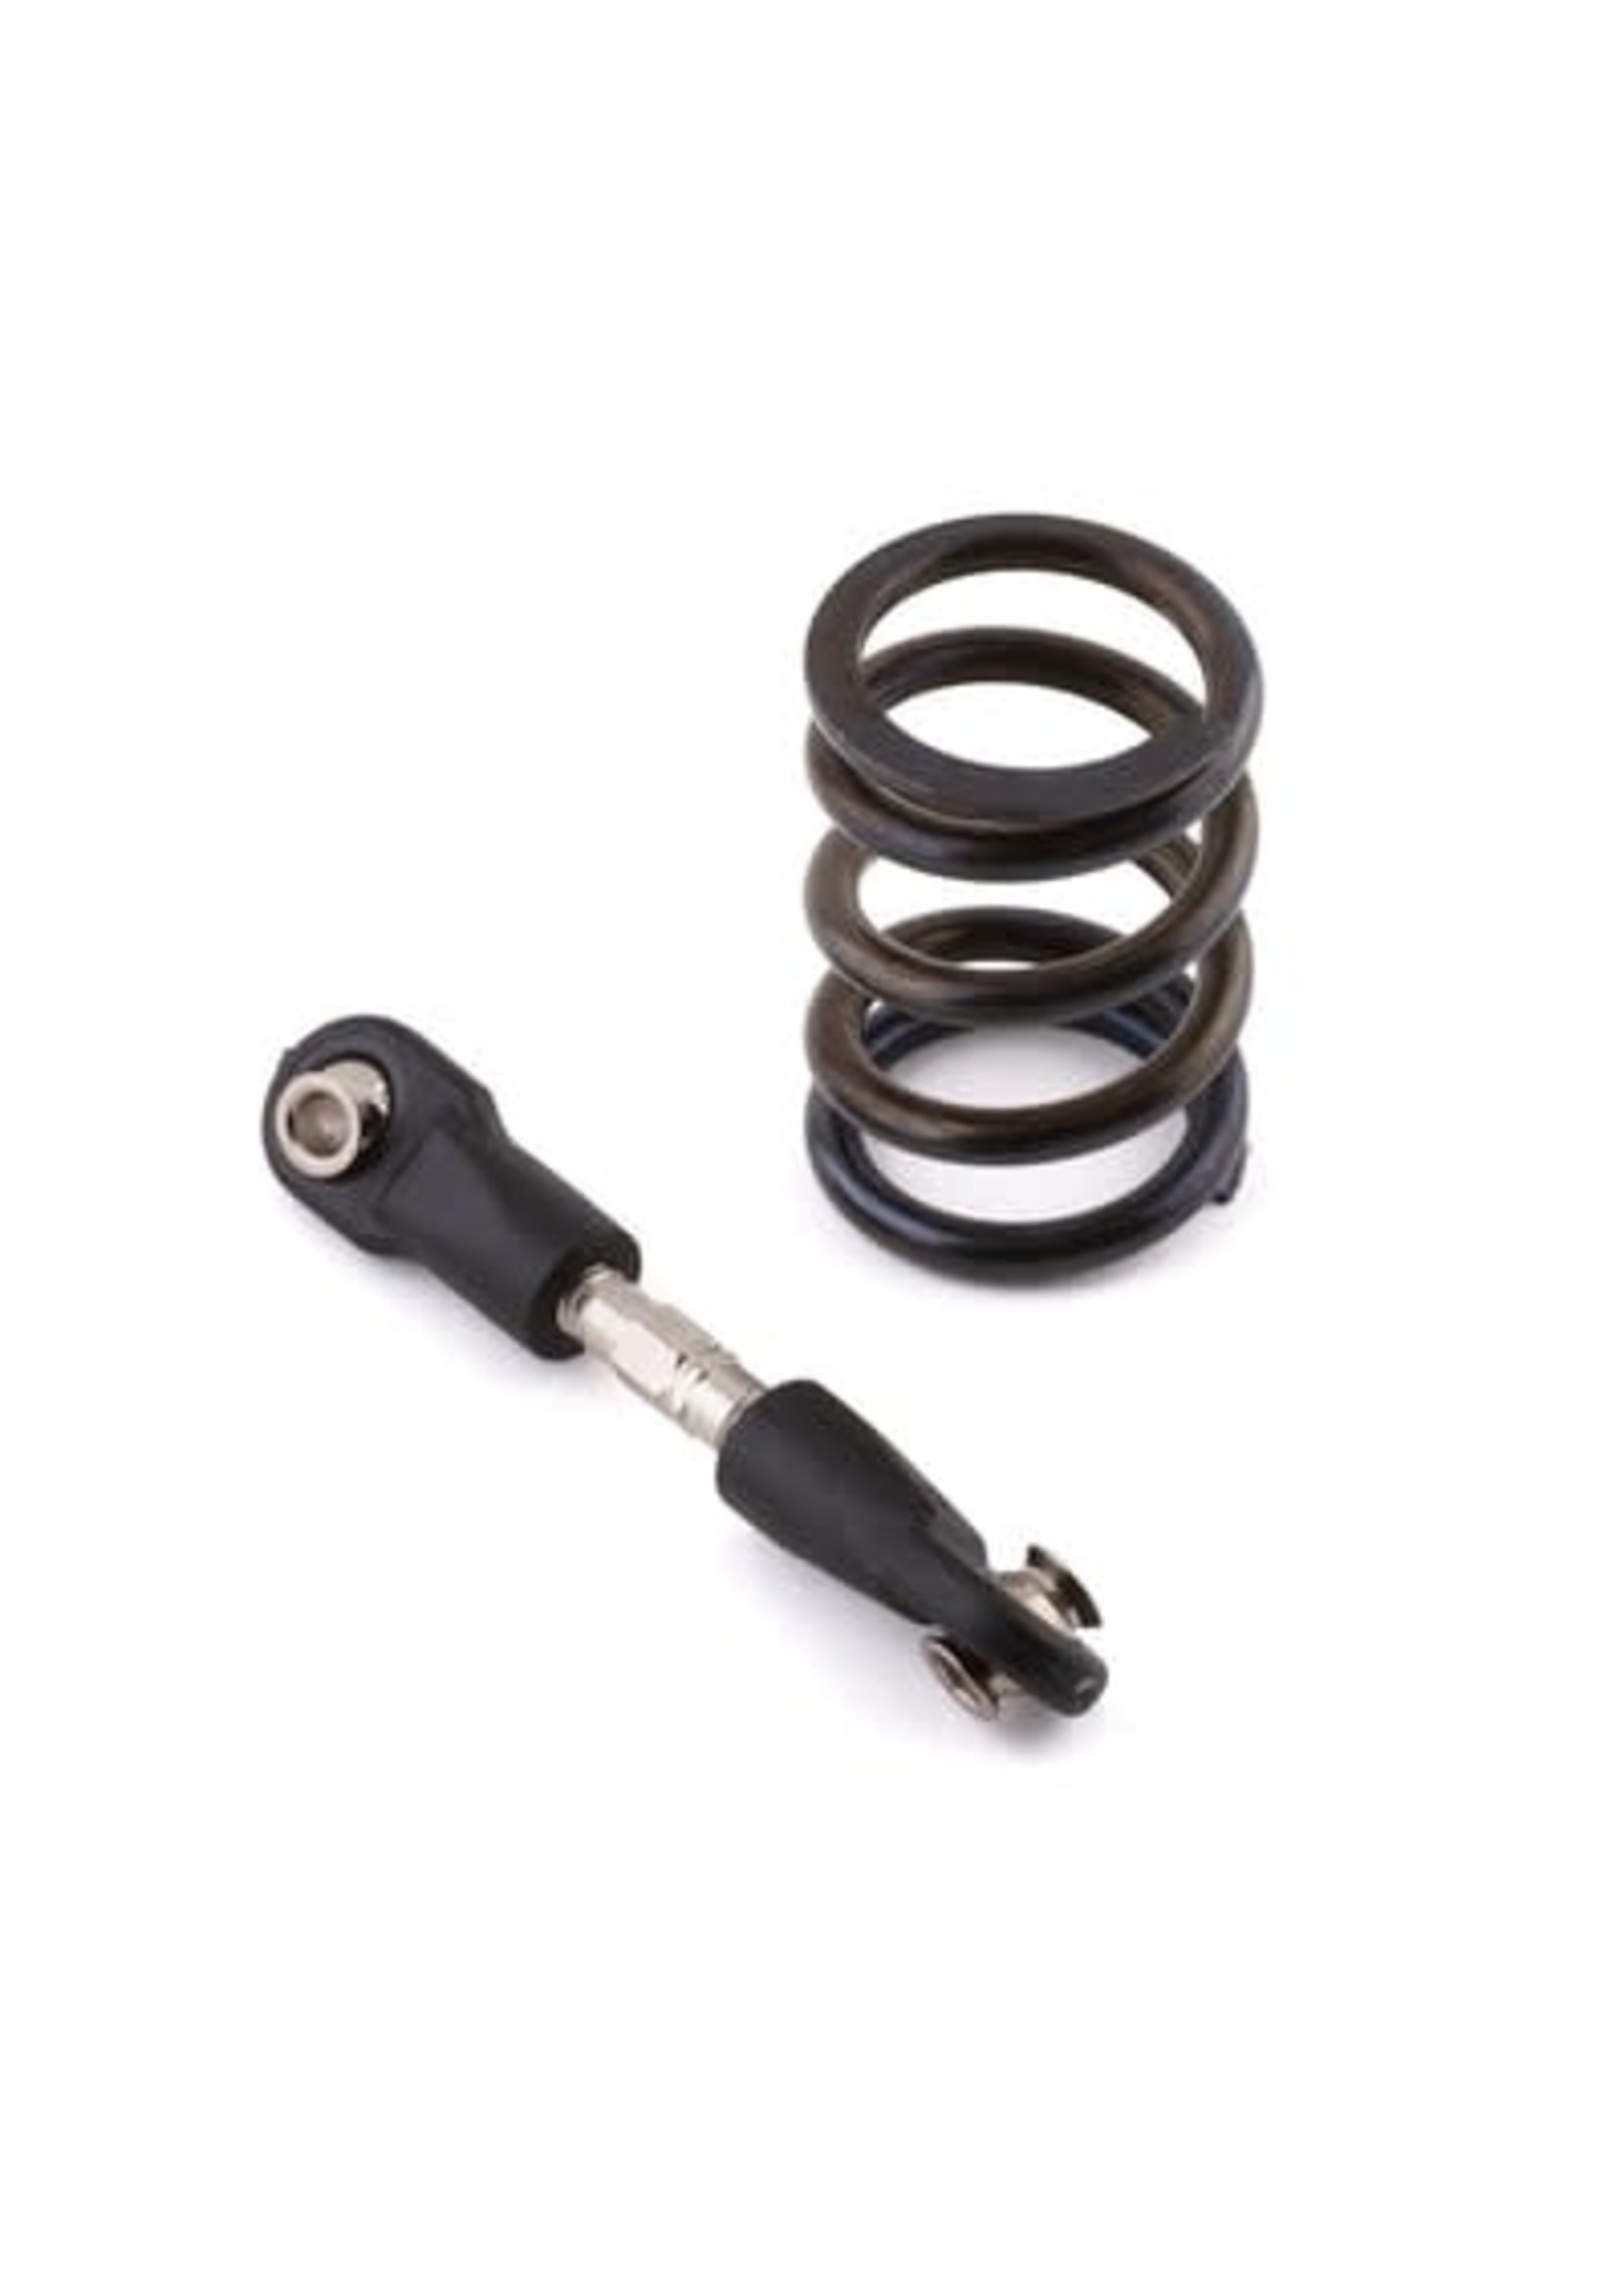 Traxxas 7746X Steering link, steel/ servo saver spring, heavy duty (use with #2085X metal gear servo)